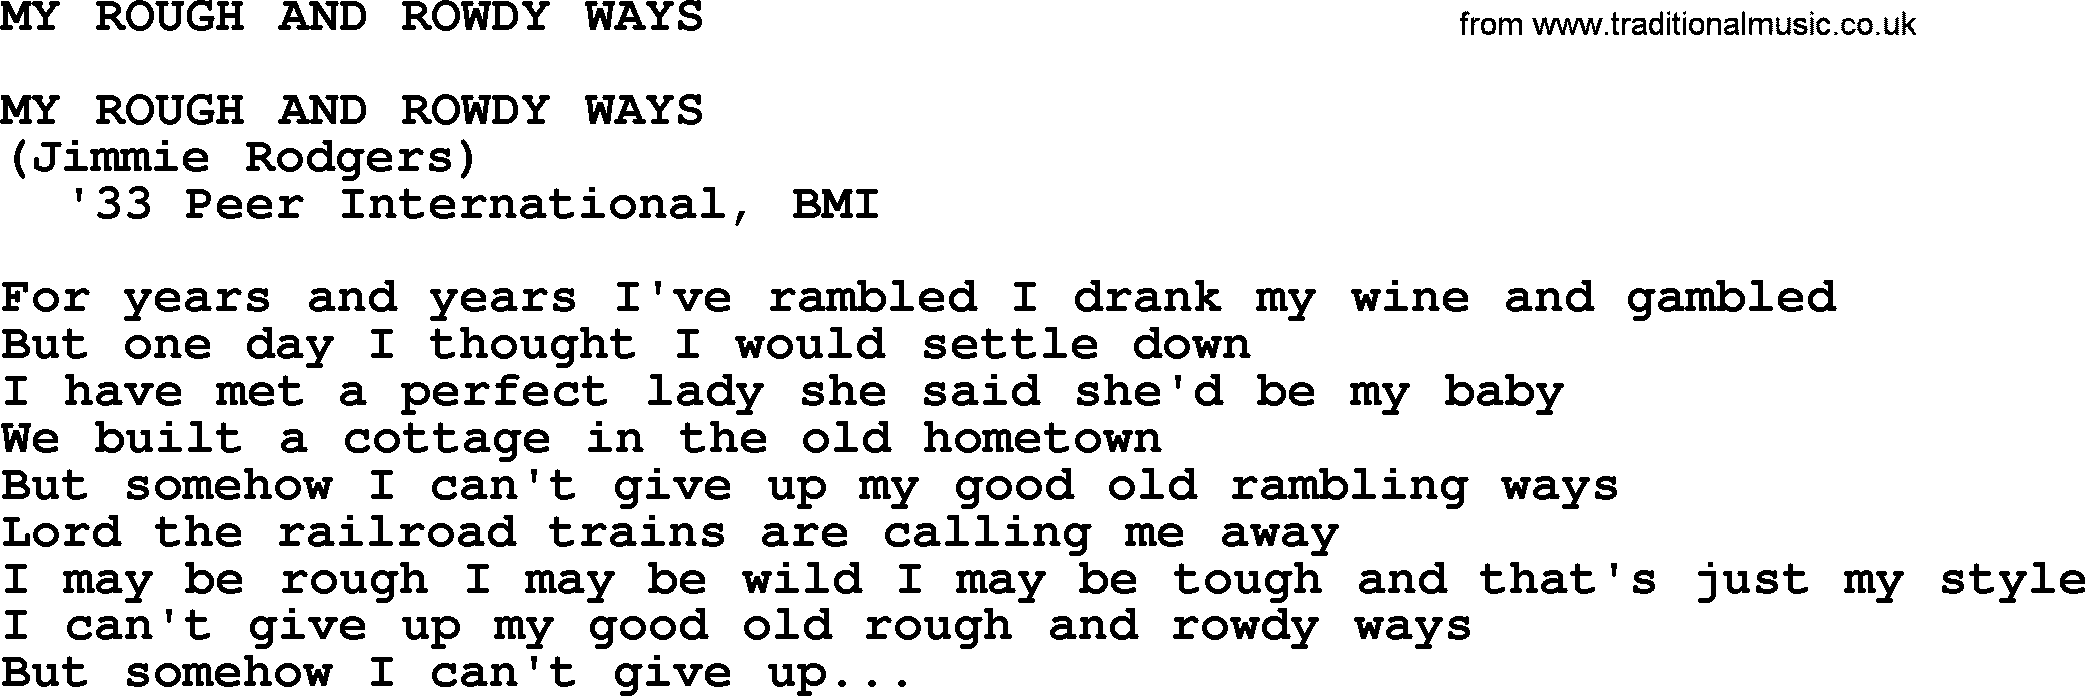 Merle Haggard song: My Rough And Rowdy Ways, lyrics.